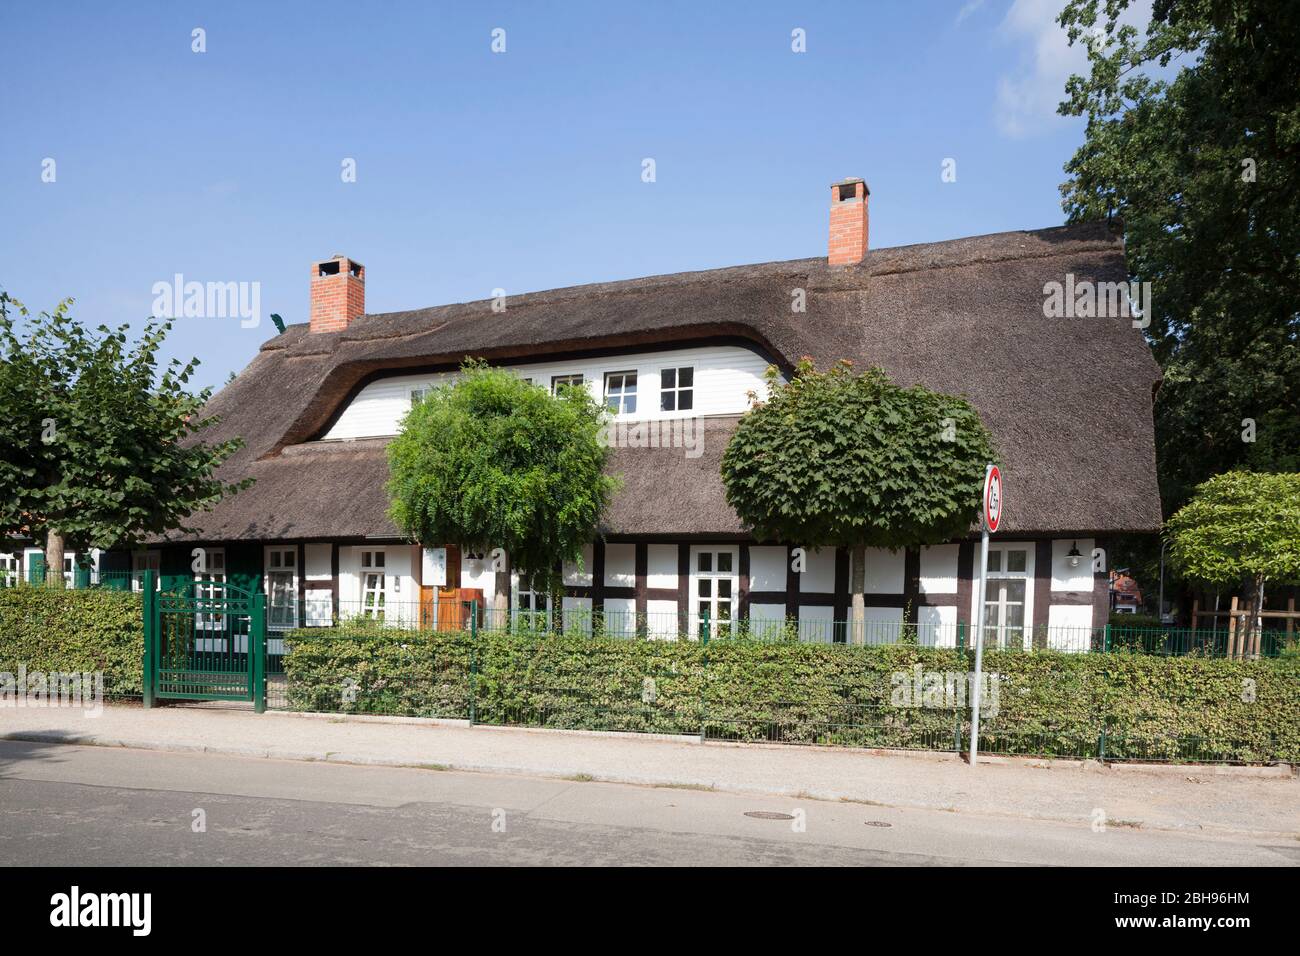 Fachwerkwohnhaus, ancienne ferme en été, Oberneuland, Bremen, Deutschland, Europa Banque D'Images